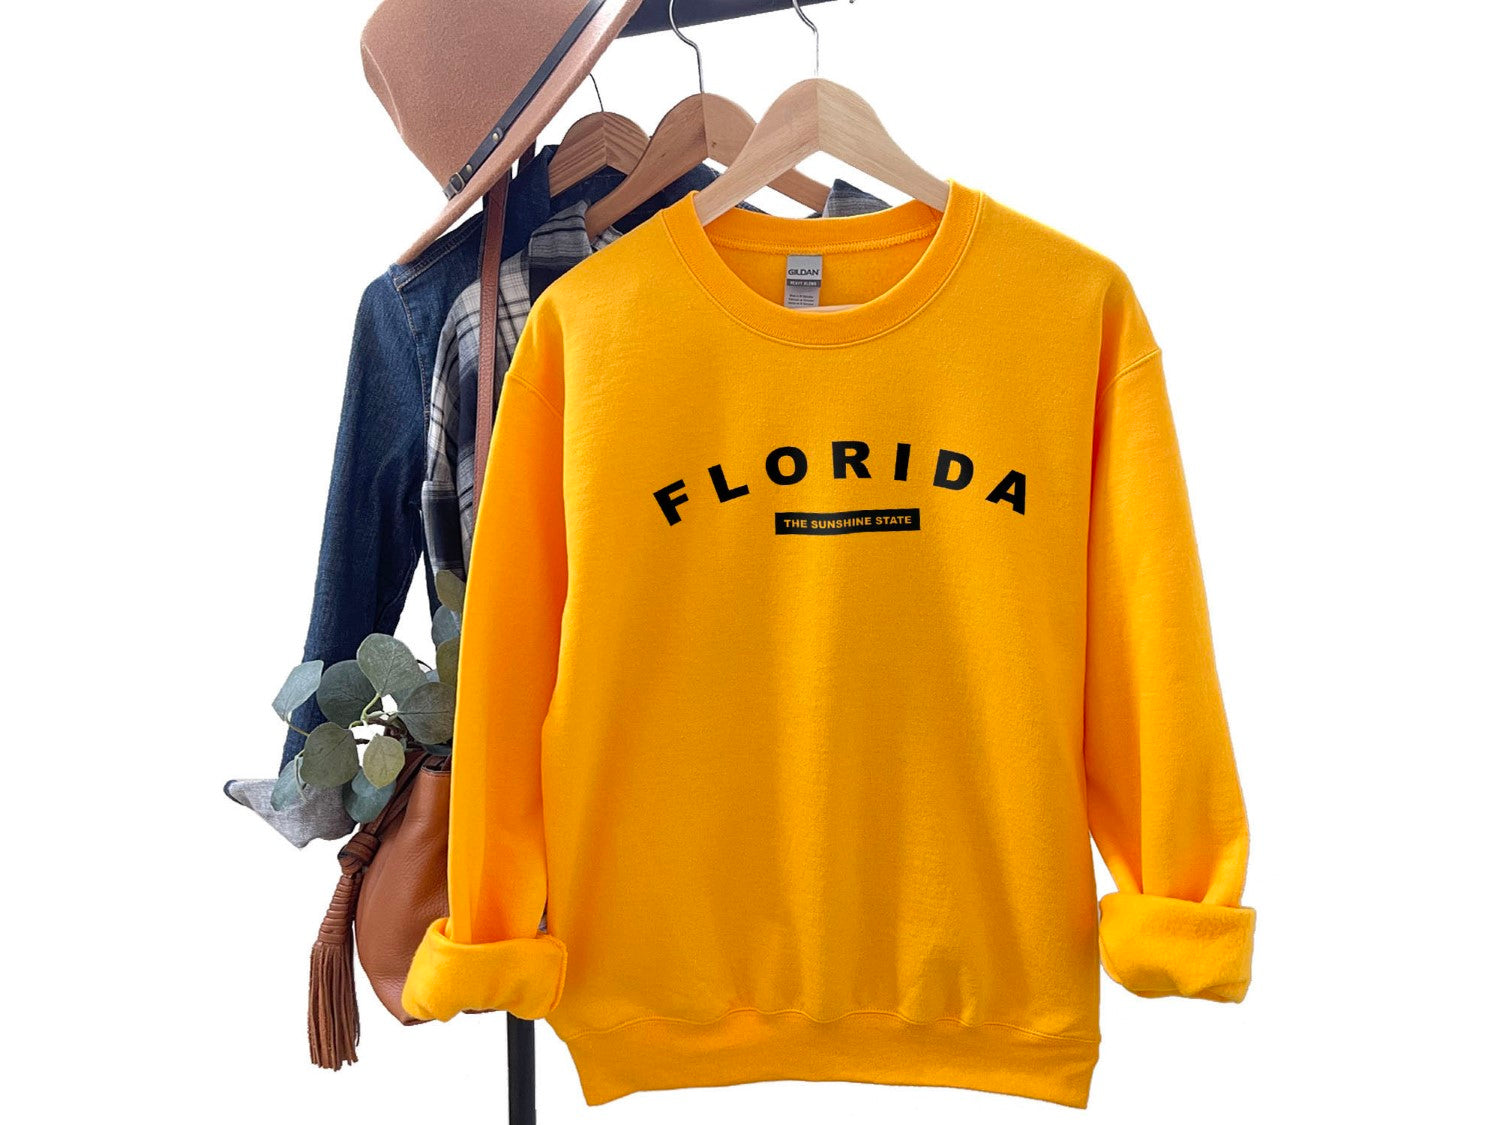 Florida The Sunshine State Sweatshirt - United States Name & Slogan Minimal Design Printed Sweatshirt